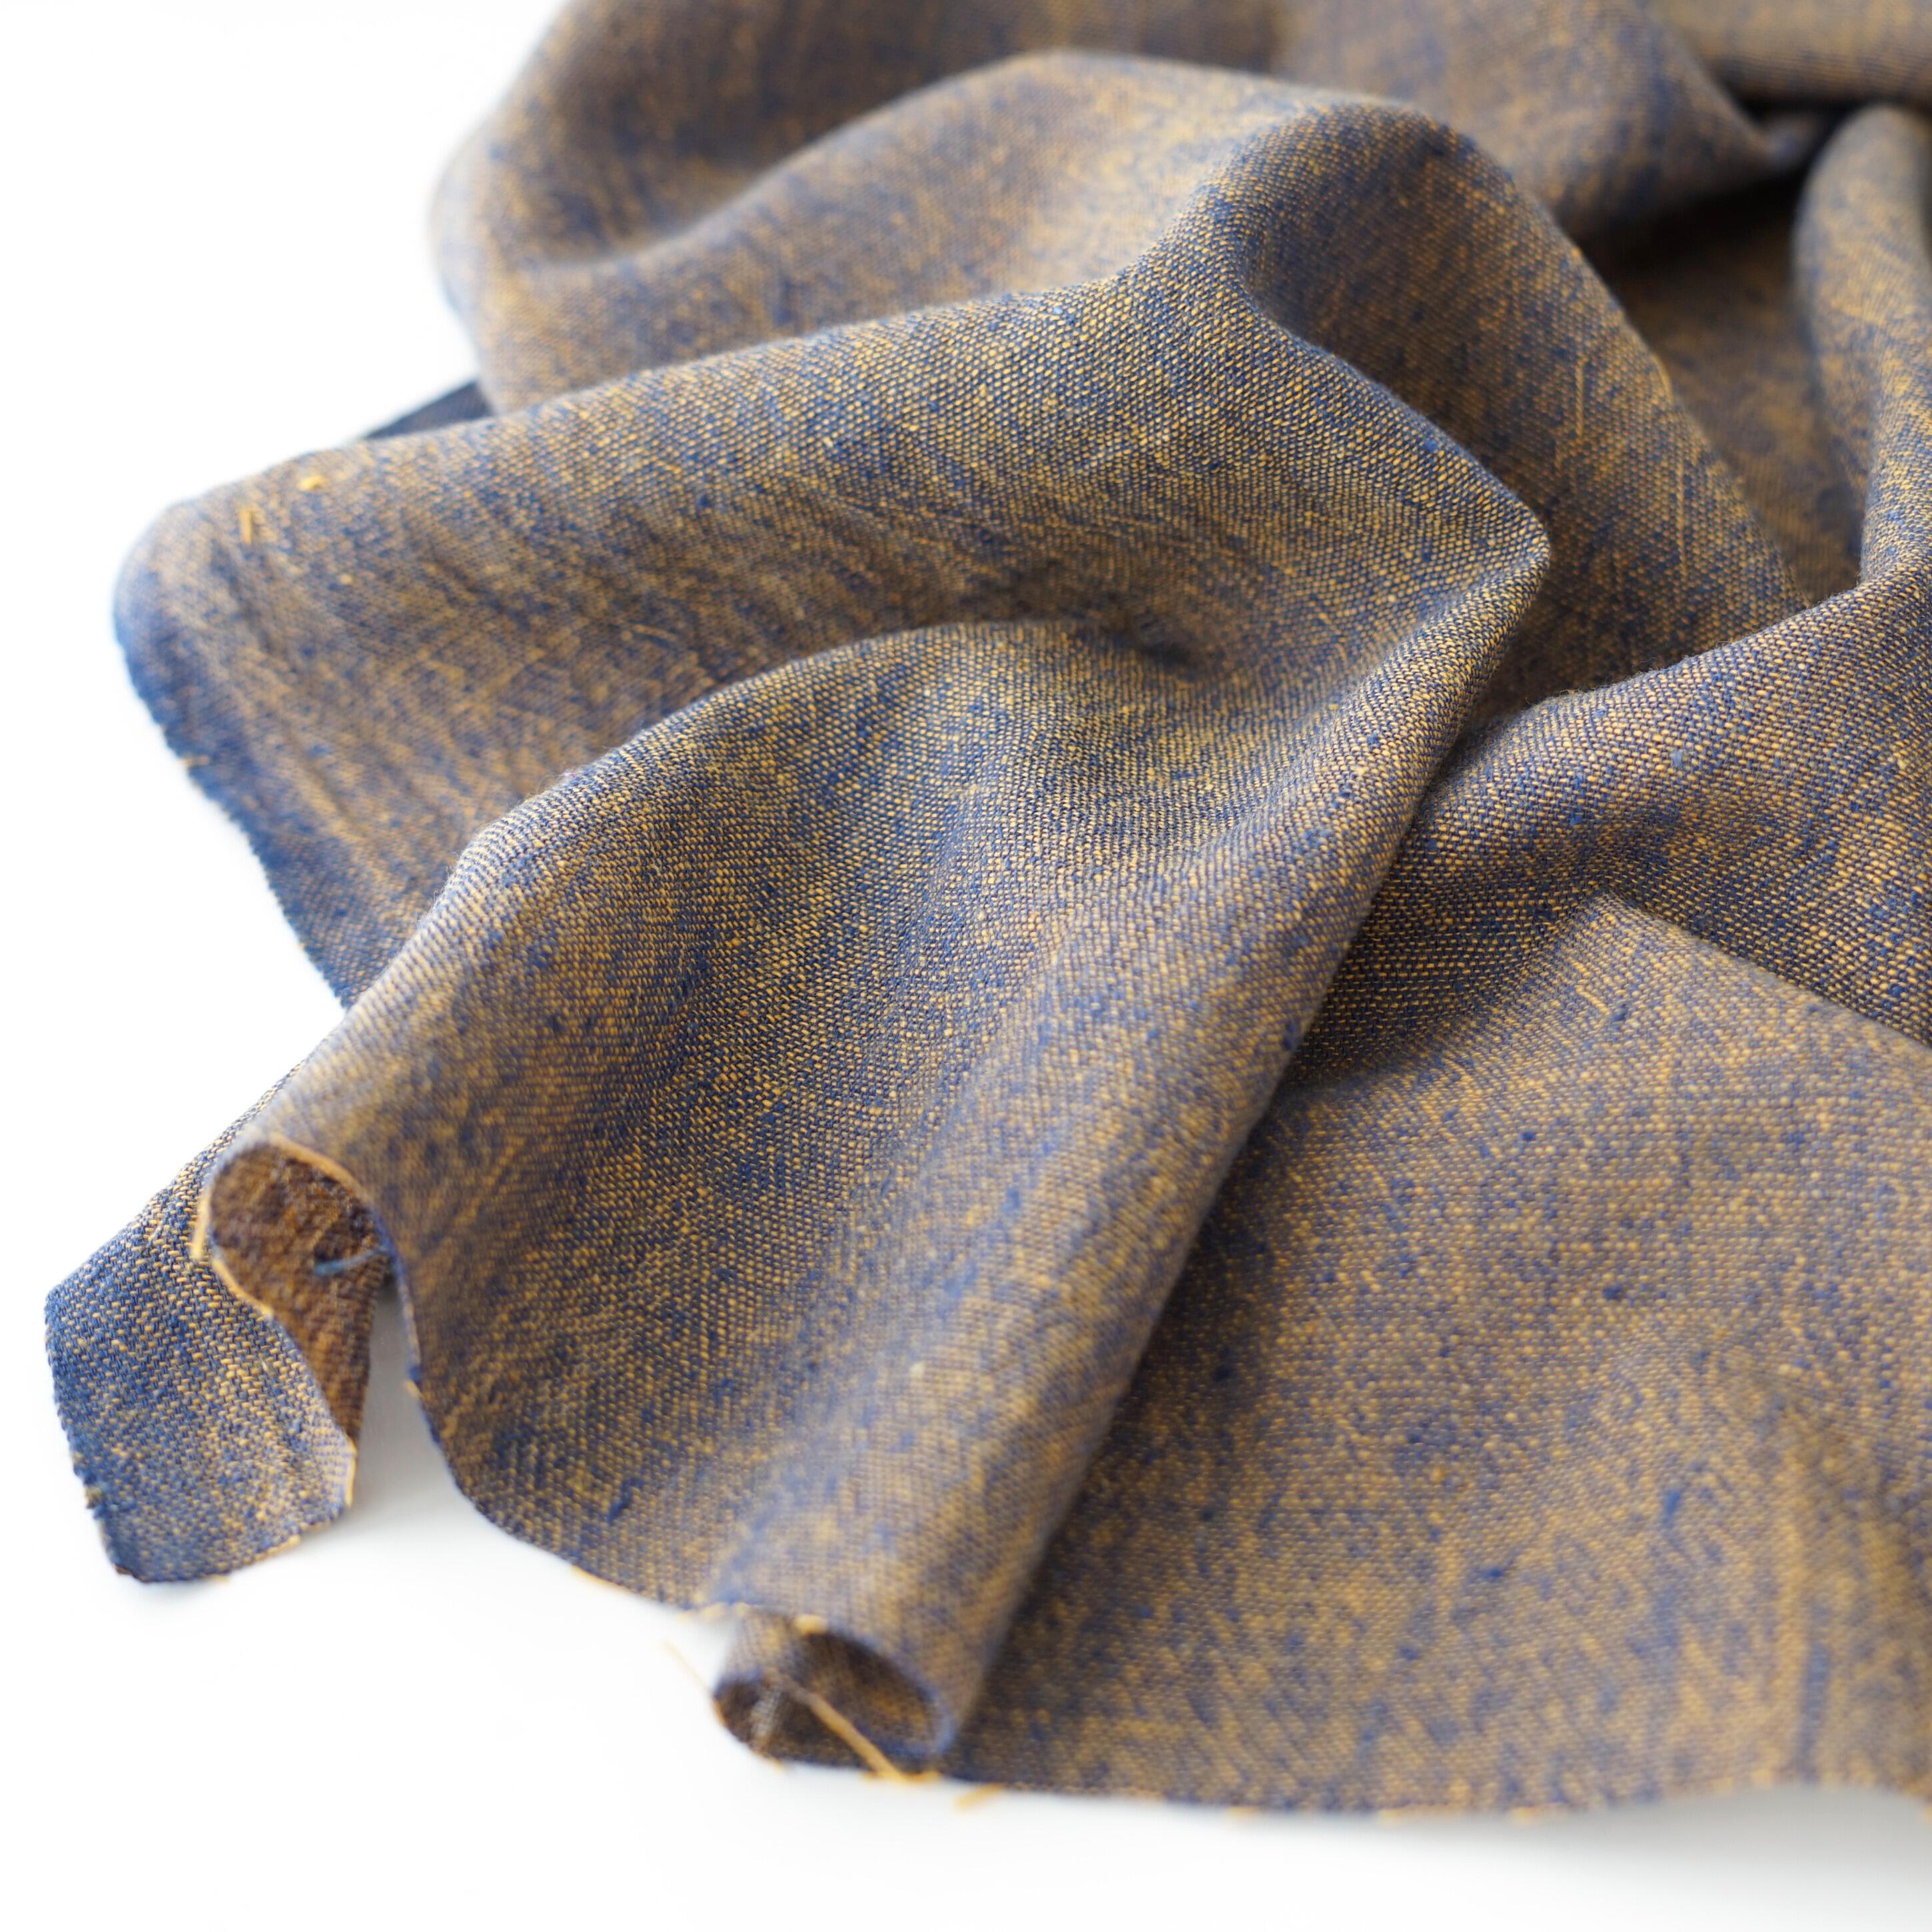 KJC16 - Organic Kala Cotton - Handloom Woven - Blue & Yellow Shot Cotton - Cross Colour - 1 by 1 - Plain Weave - Yarn Dye - Contrast.JPG